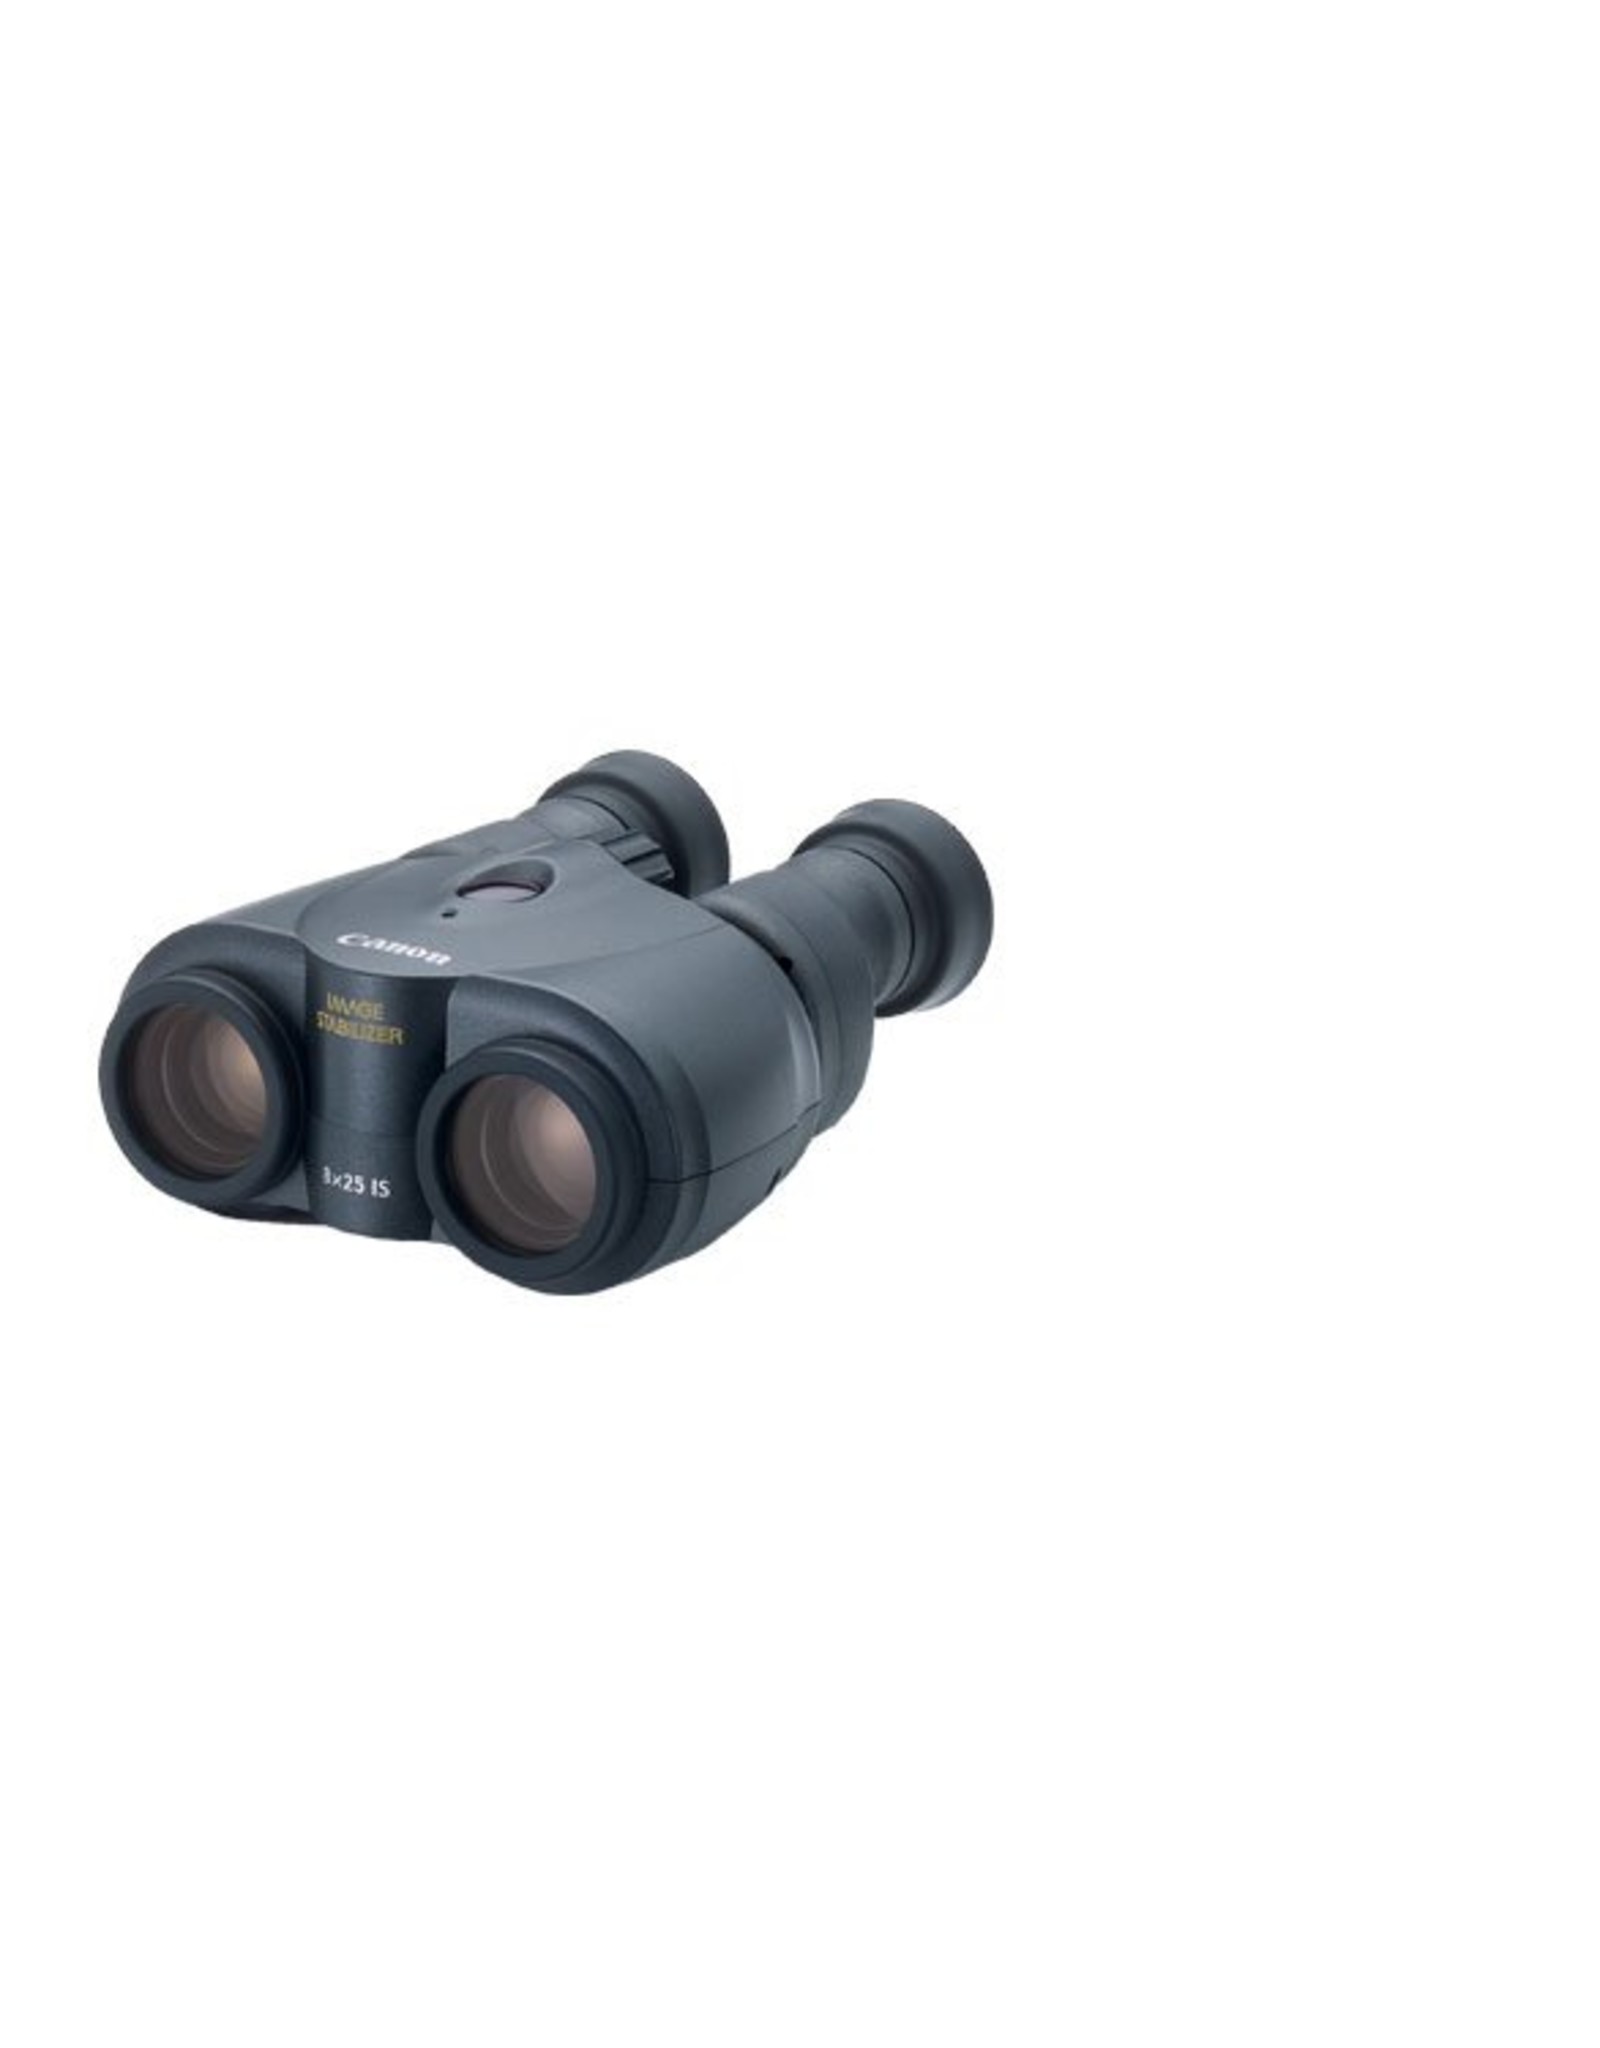 canon binoculars with camera